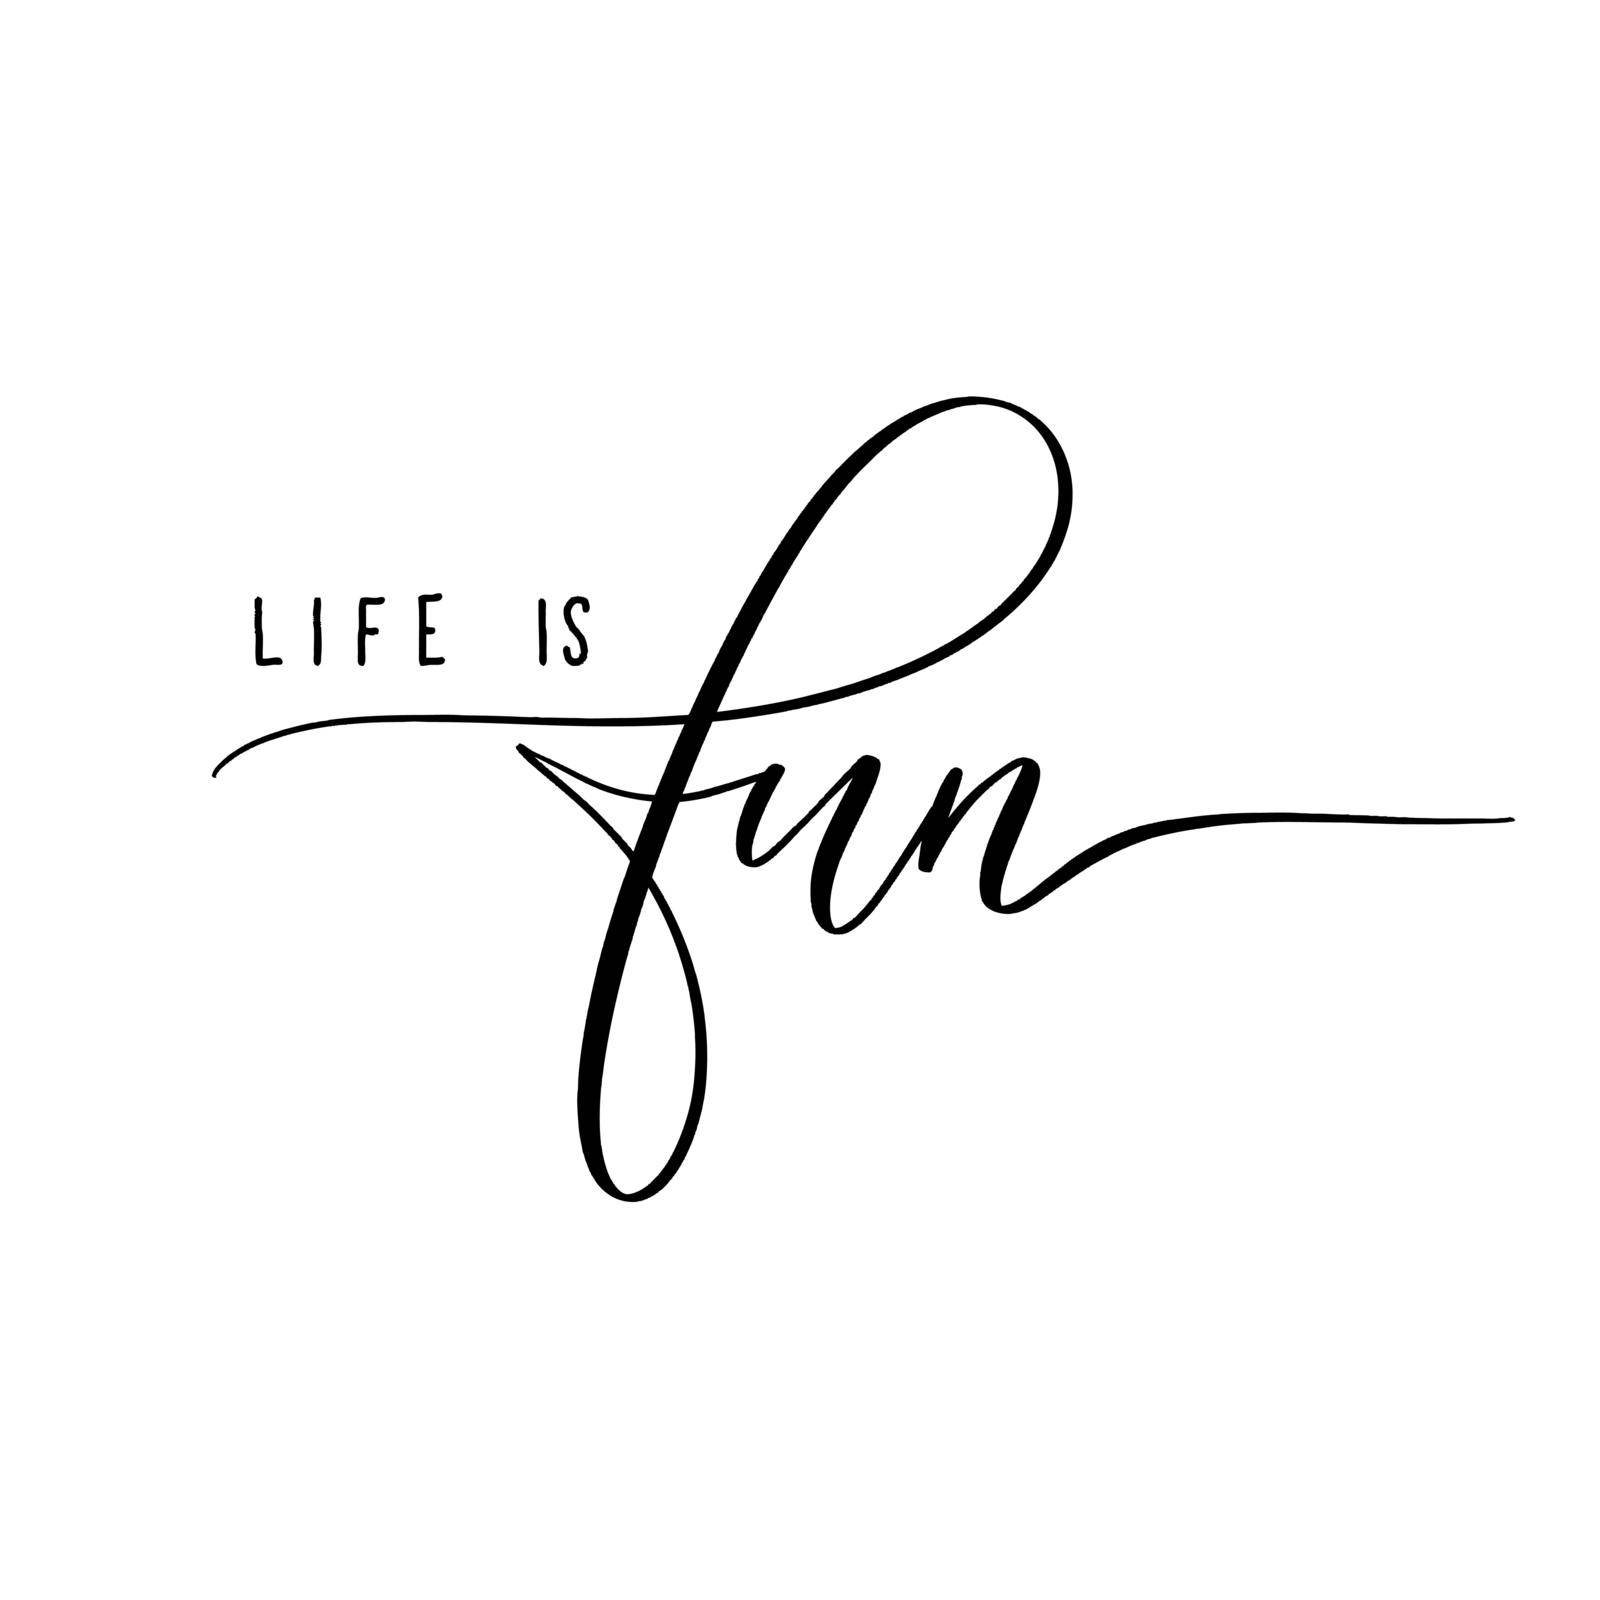 Life is fun - lettering inscription. by ku4erashka